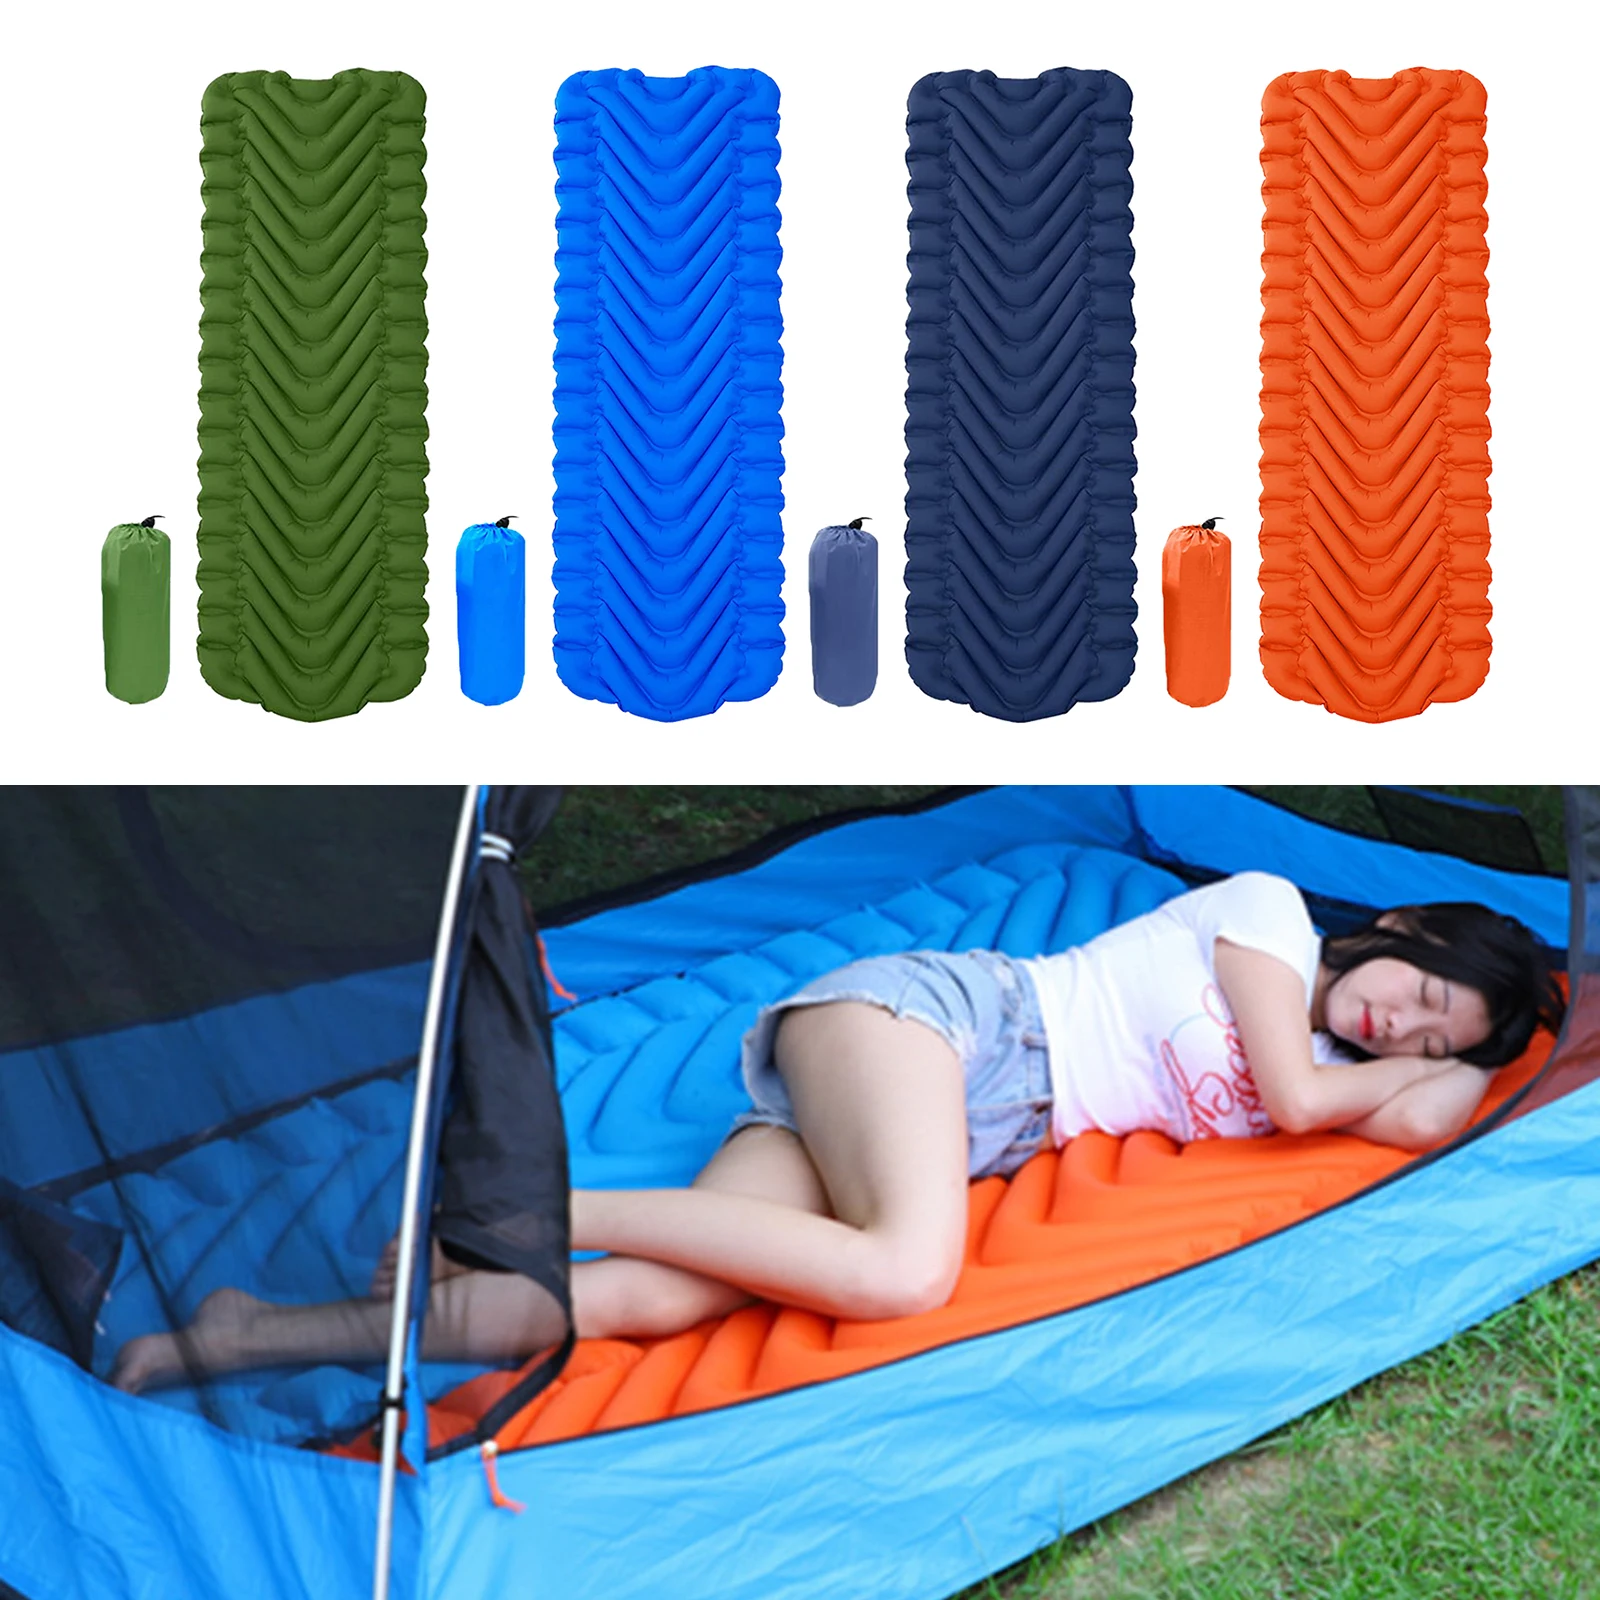 Outdoor Travel Camping Hiking Inflatable Air Bed Mat Mattress Pad Cushion 